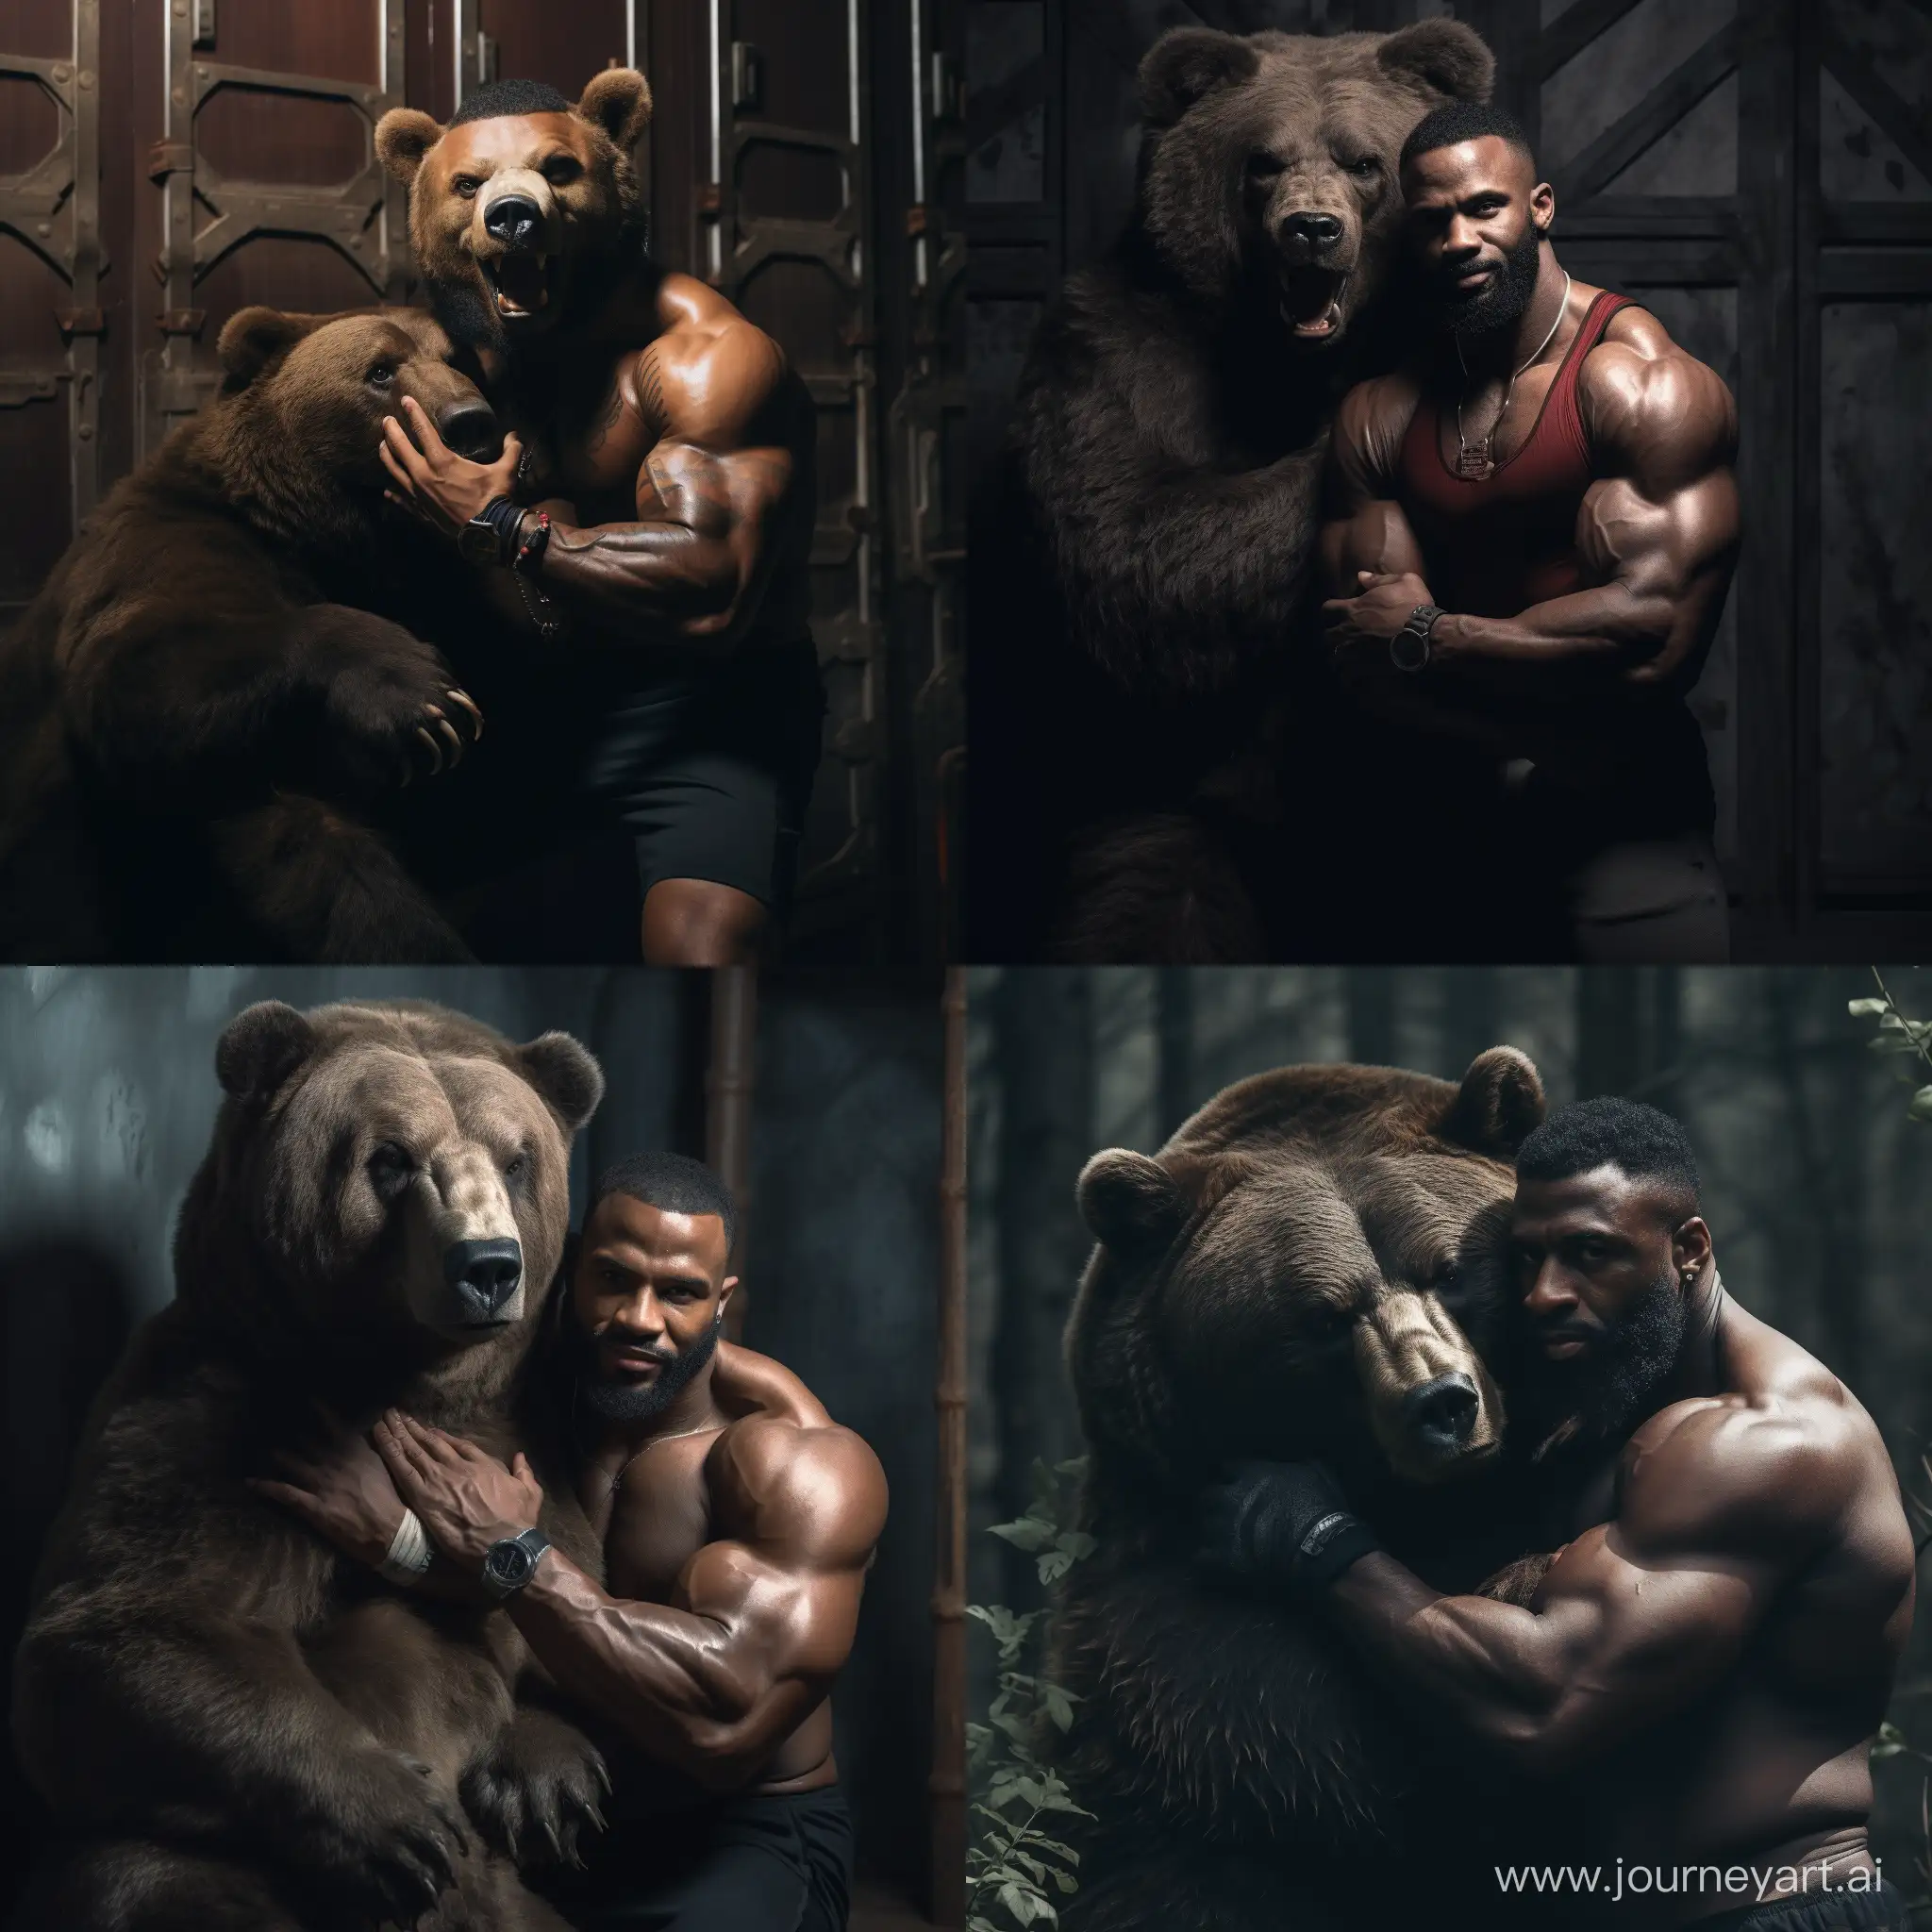 Muscular-Man-Embraces-Bear-with-Joyful-Thumbs-Up